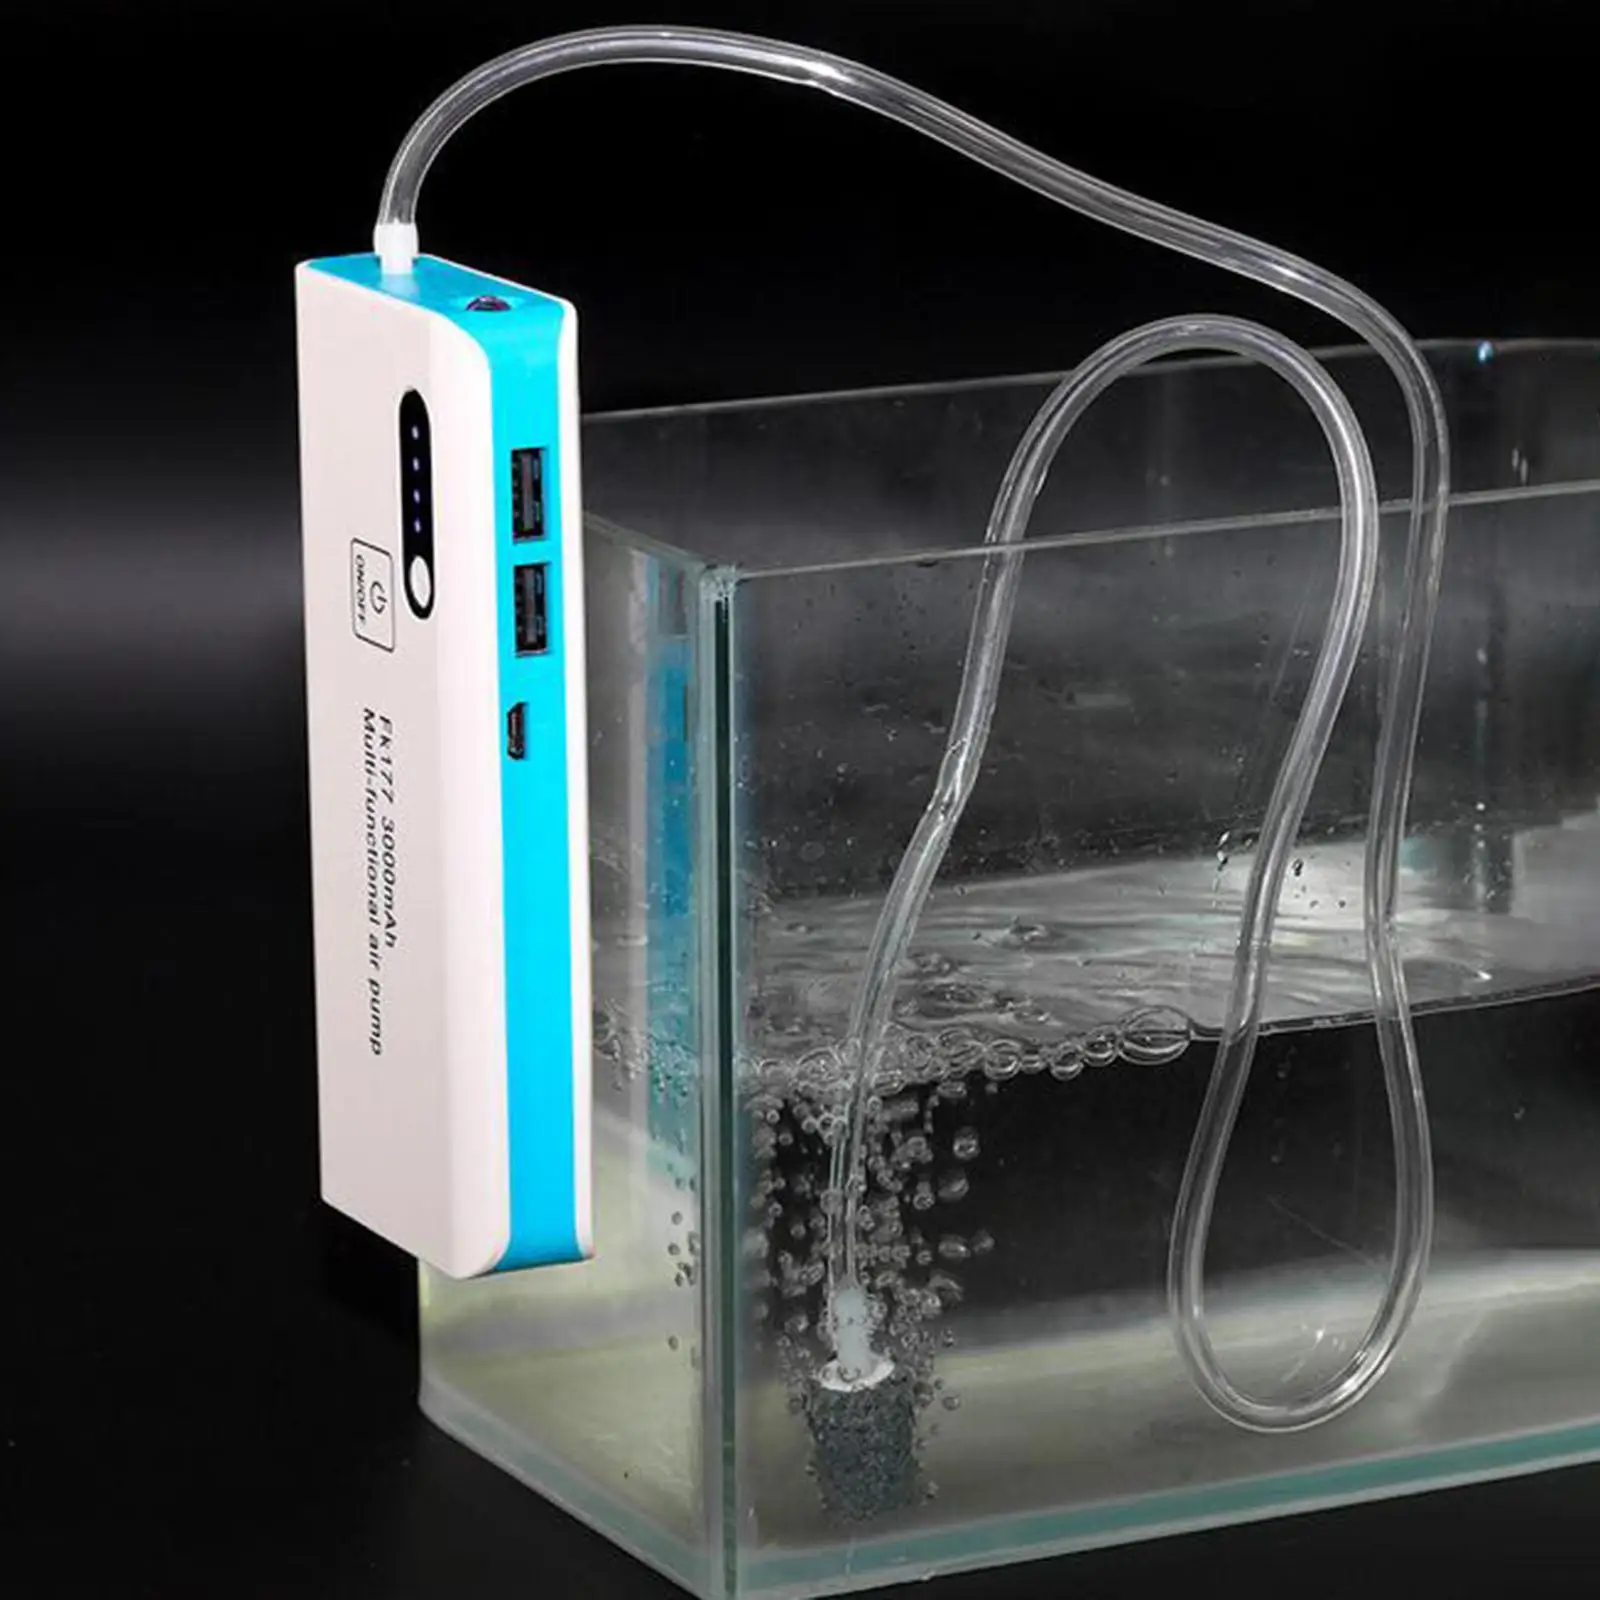 Mini Aquarium Air Pump Oxygen Filter USB Air Aerator Fish Tank Powerful Mute Aquatic Animal for Outdoor Fishing Emergency Pond